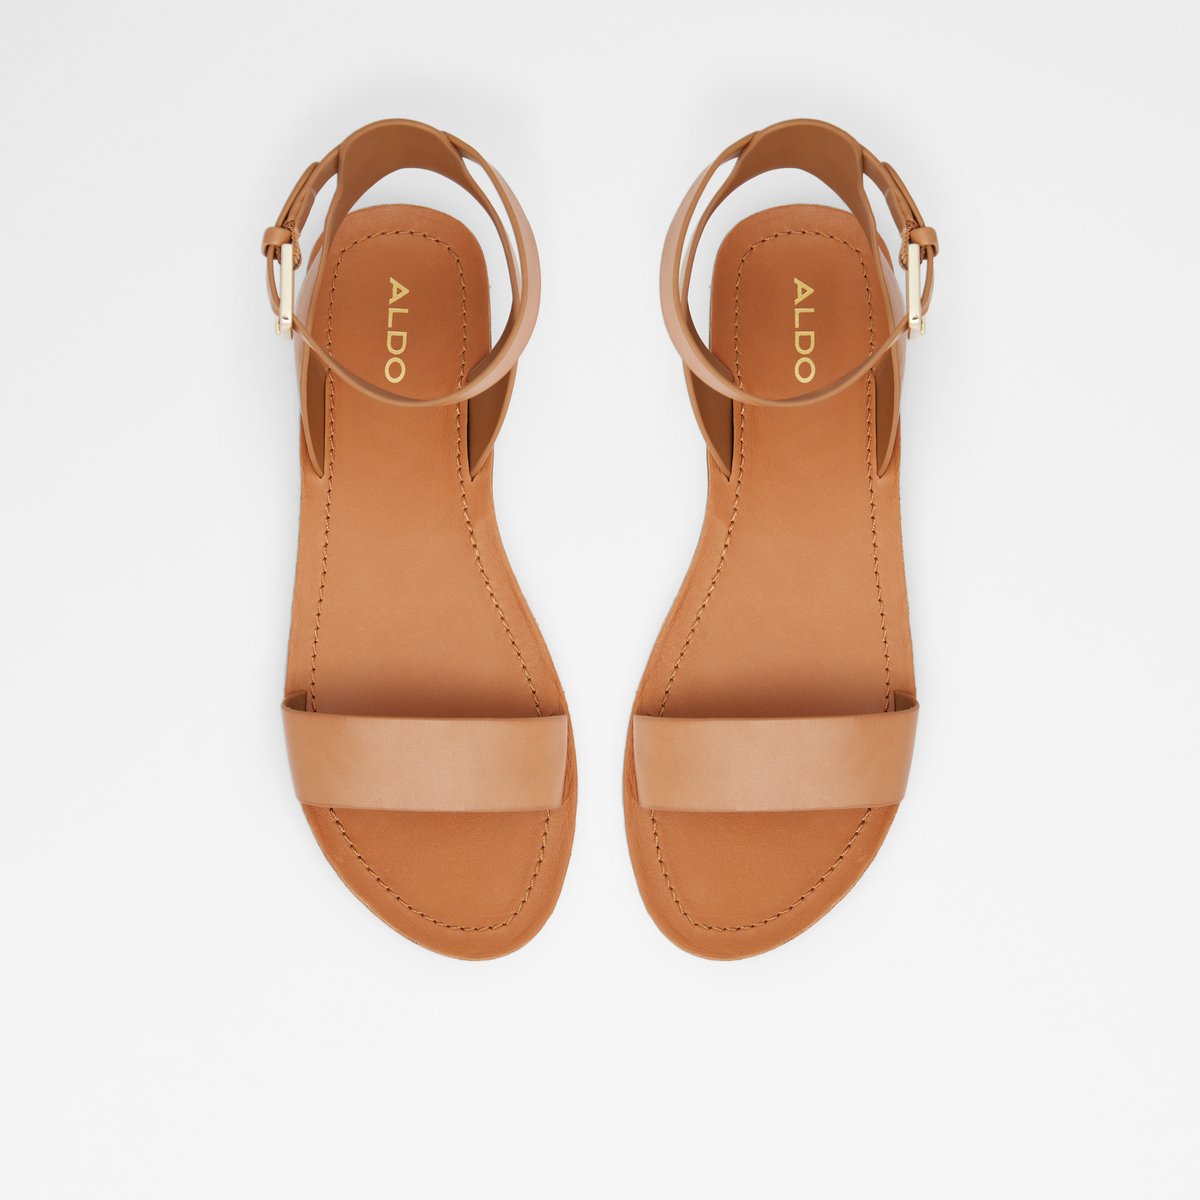 Vagabond Tia cross strap leather flat sandals in cognac | ASOS